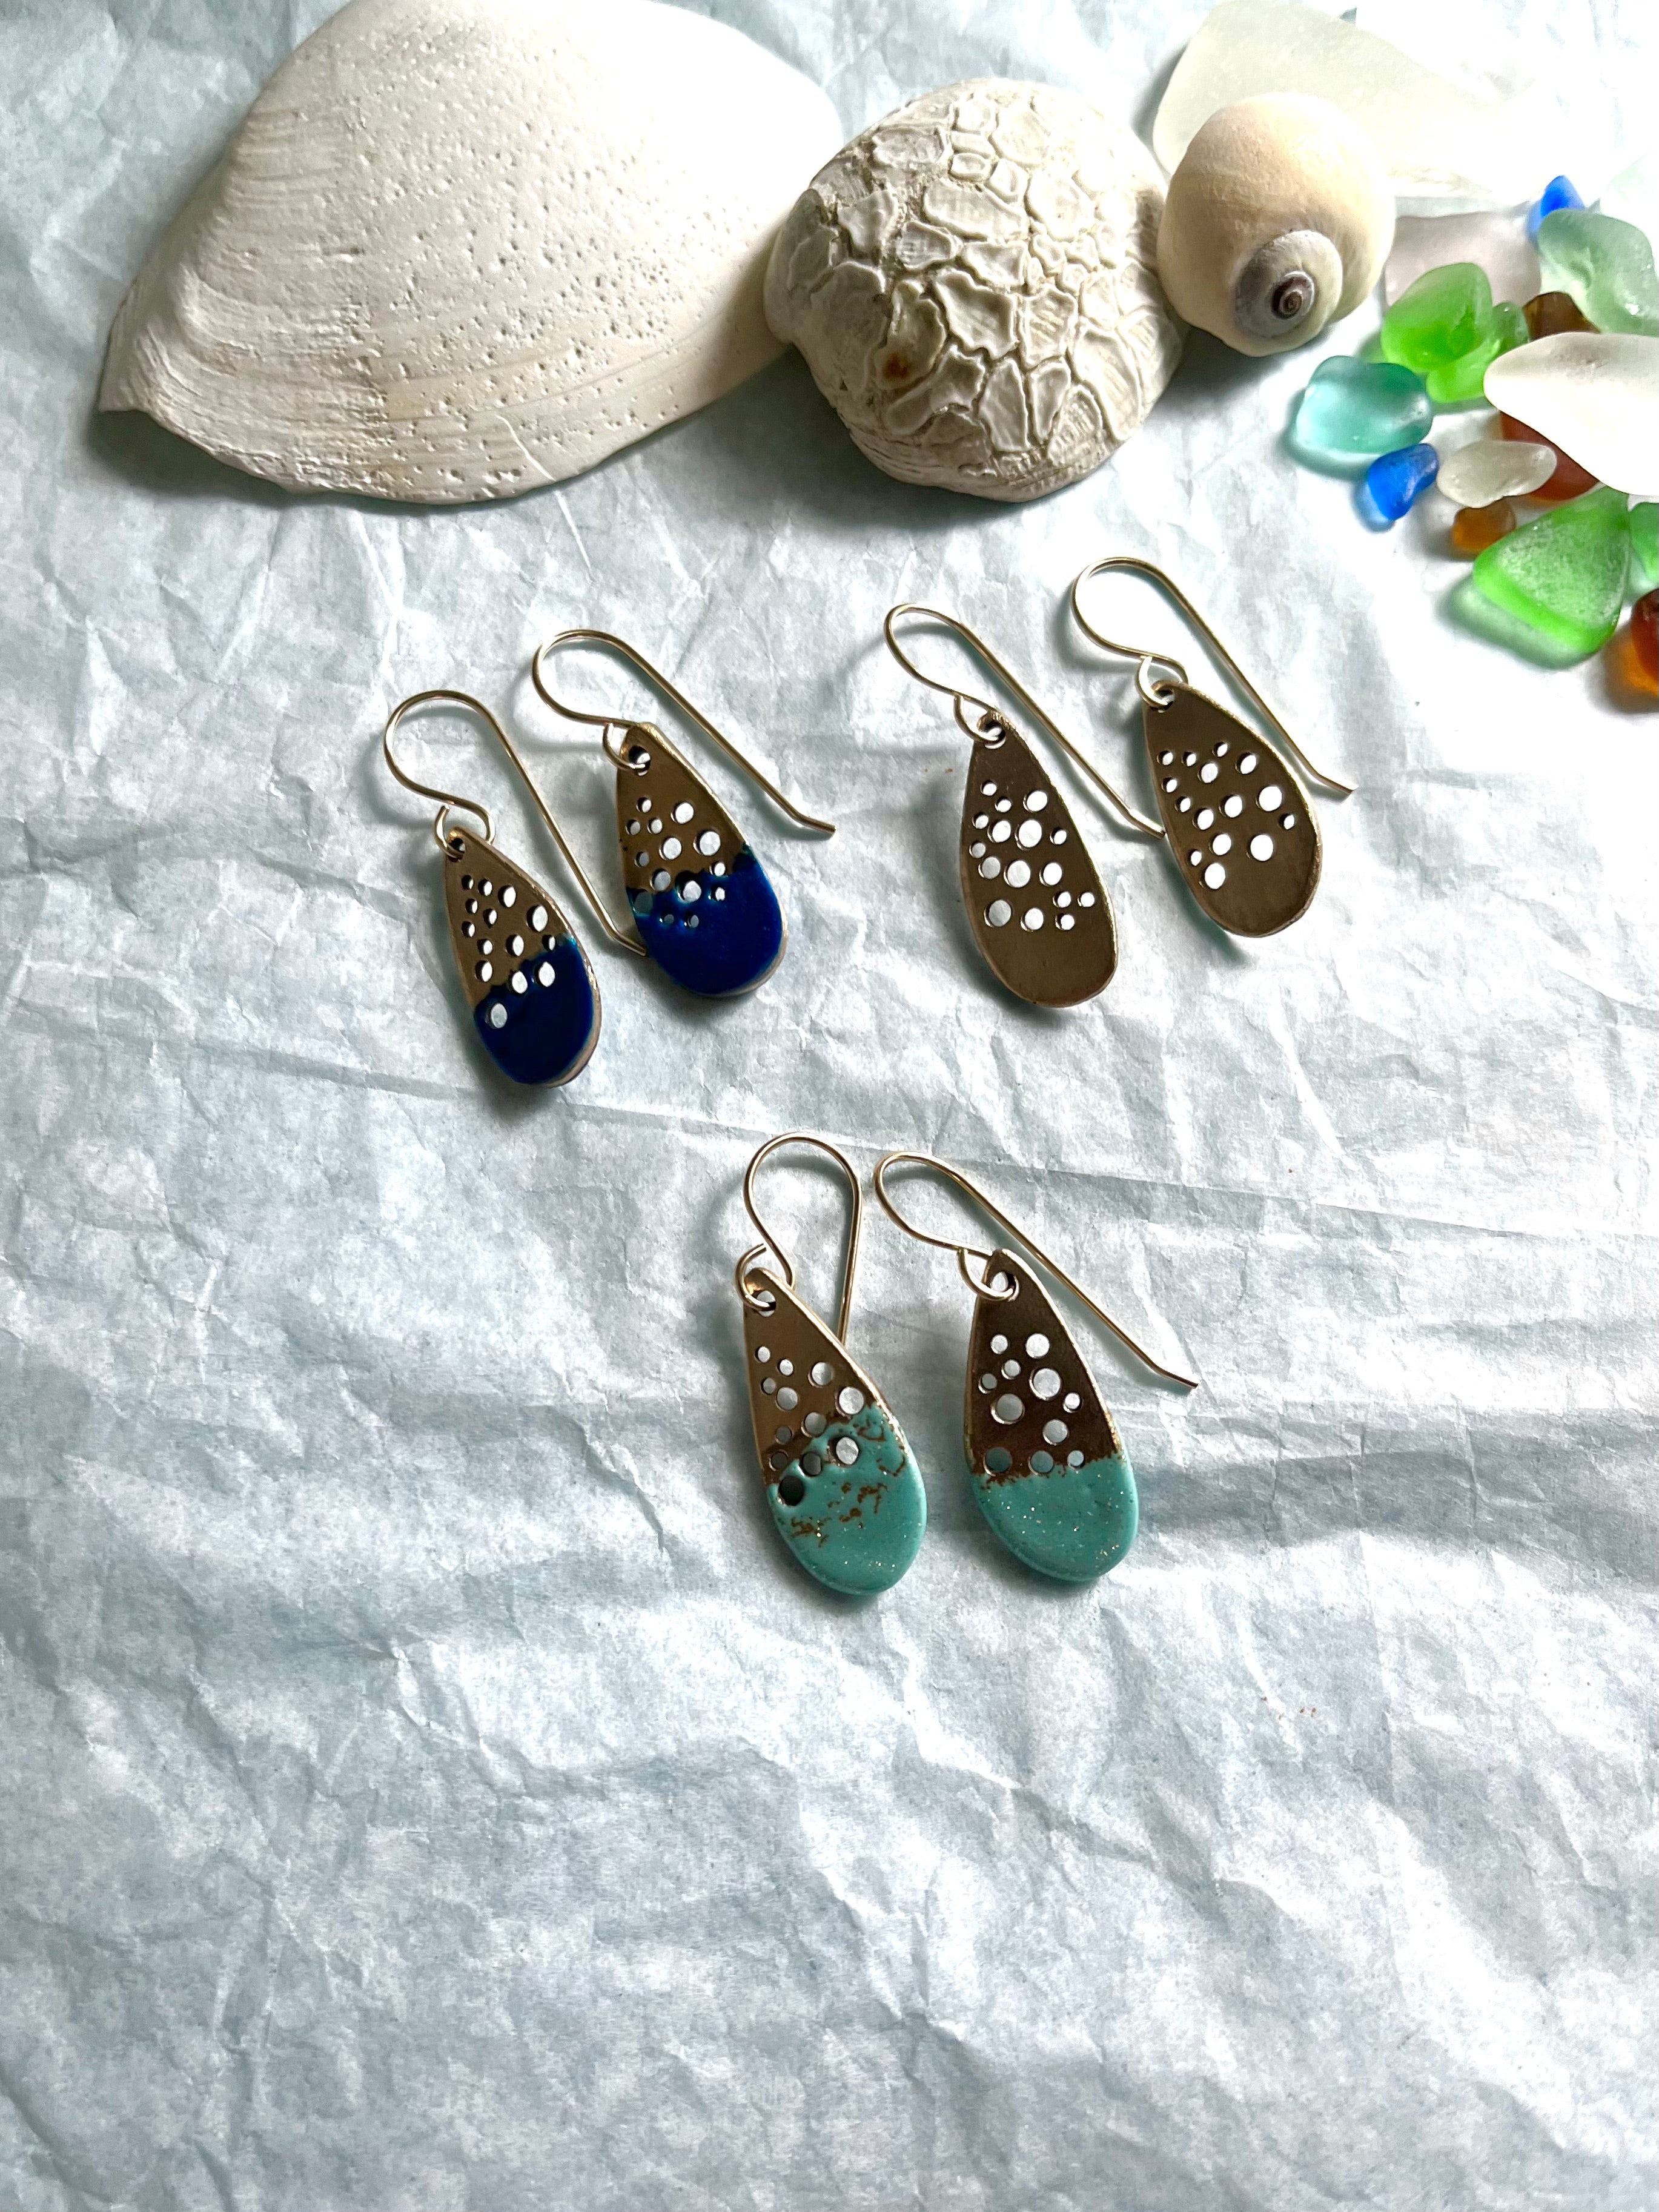 Artisan made earrings with seaglass and sea shells